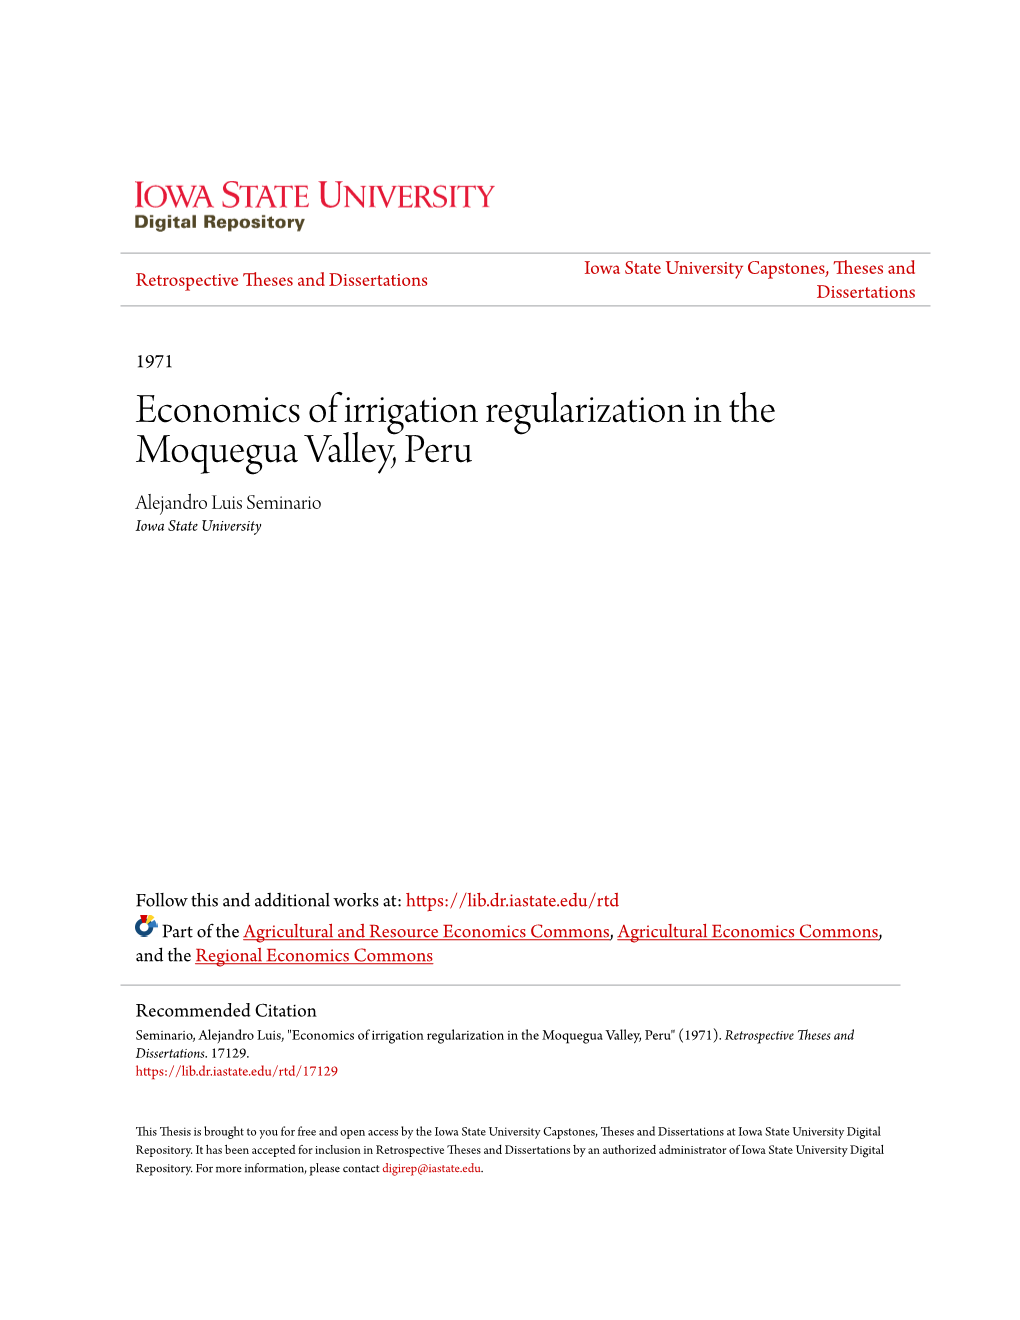 Economics of Irrigation Regularization in the Moquegua Valley, Peru Alejandro Luis Seminario Iowa State University